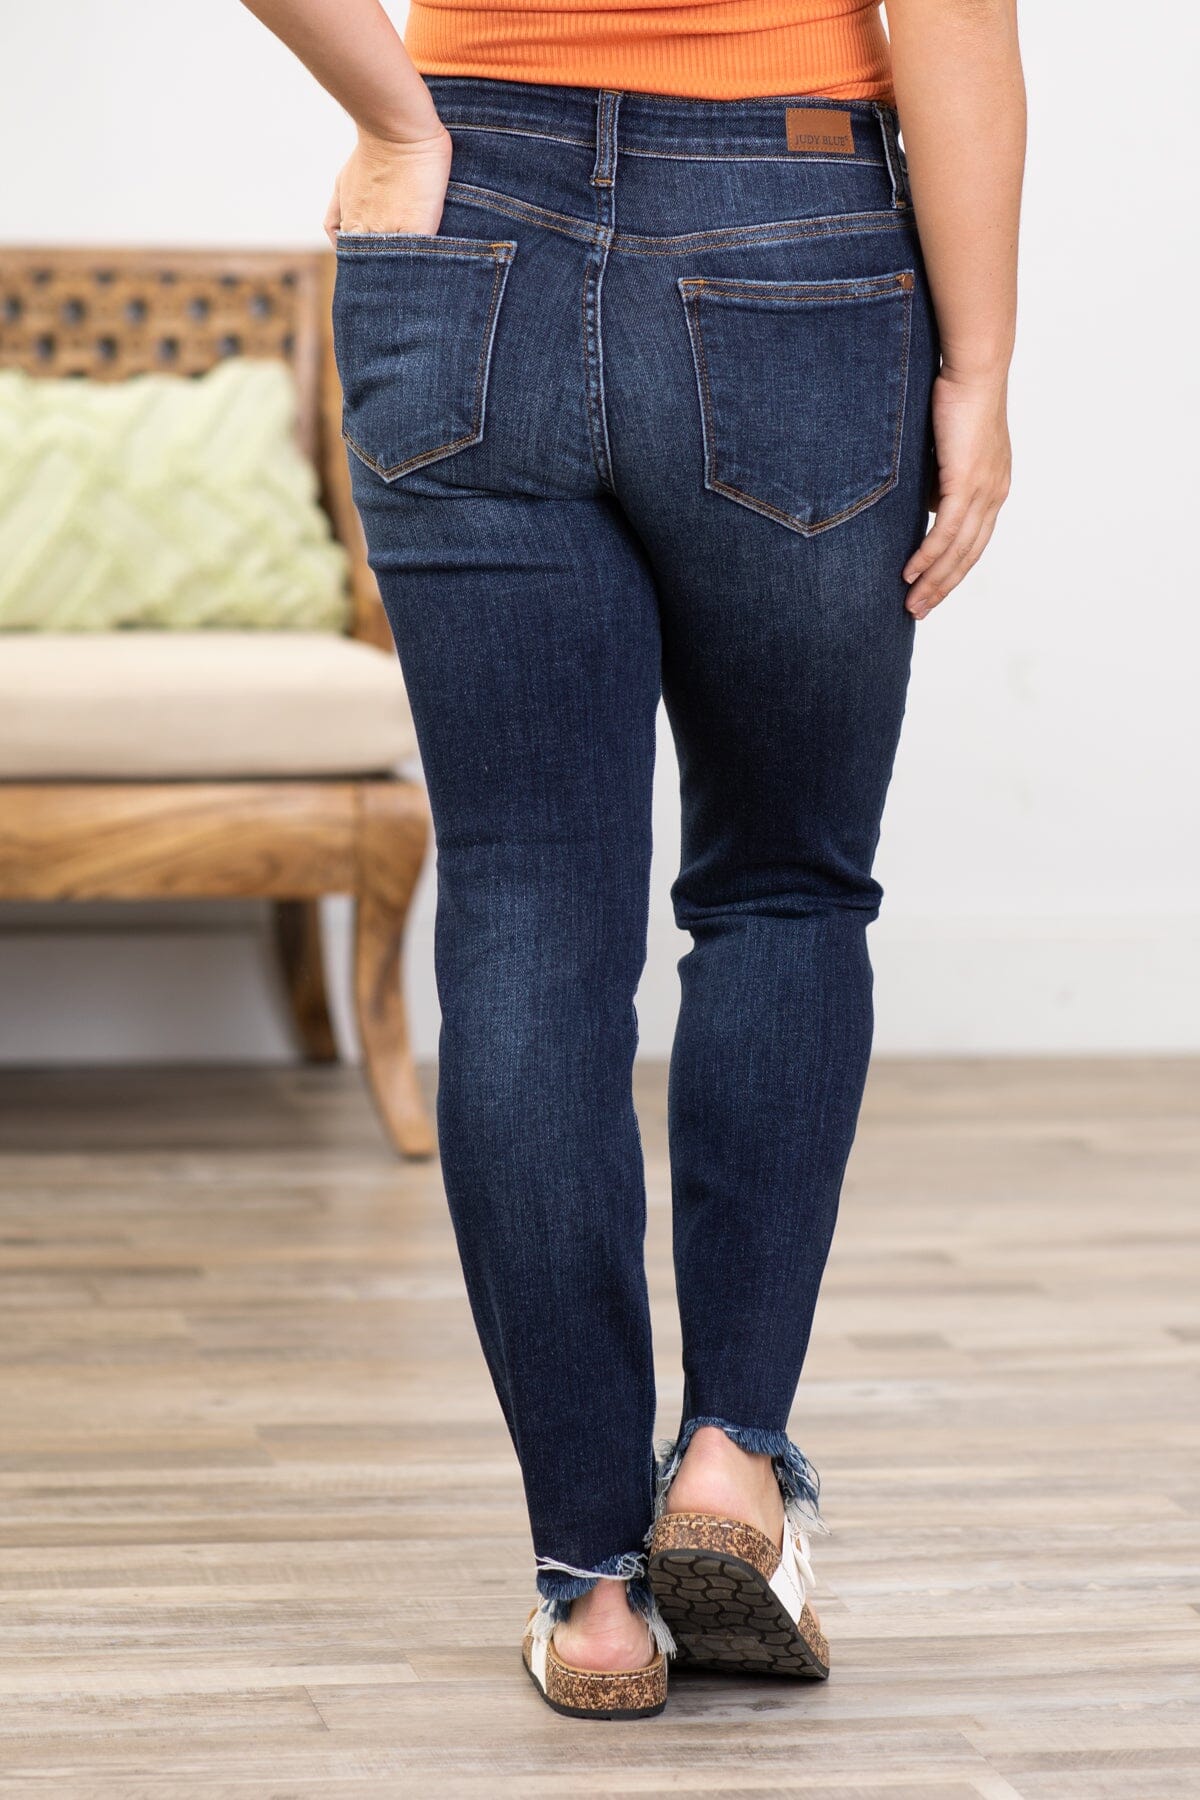 Judy Blue Dark Wash Fray Hem Skinny Jeans - Filly Flair